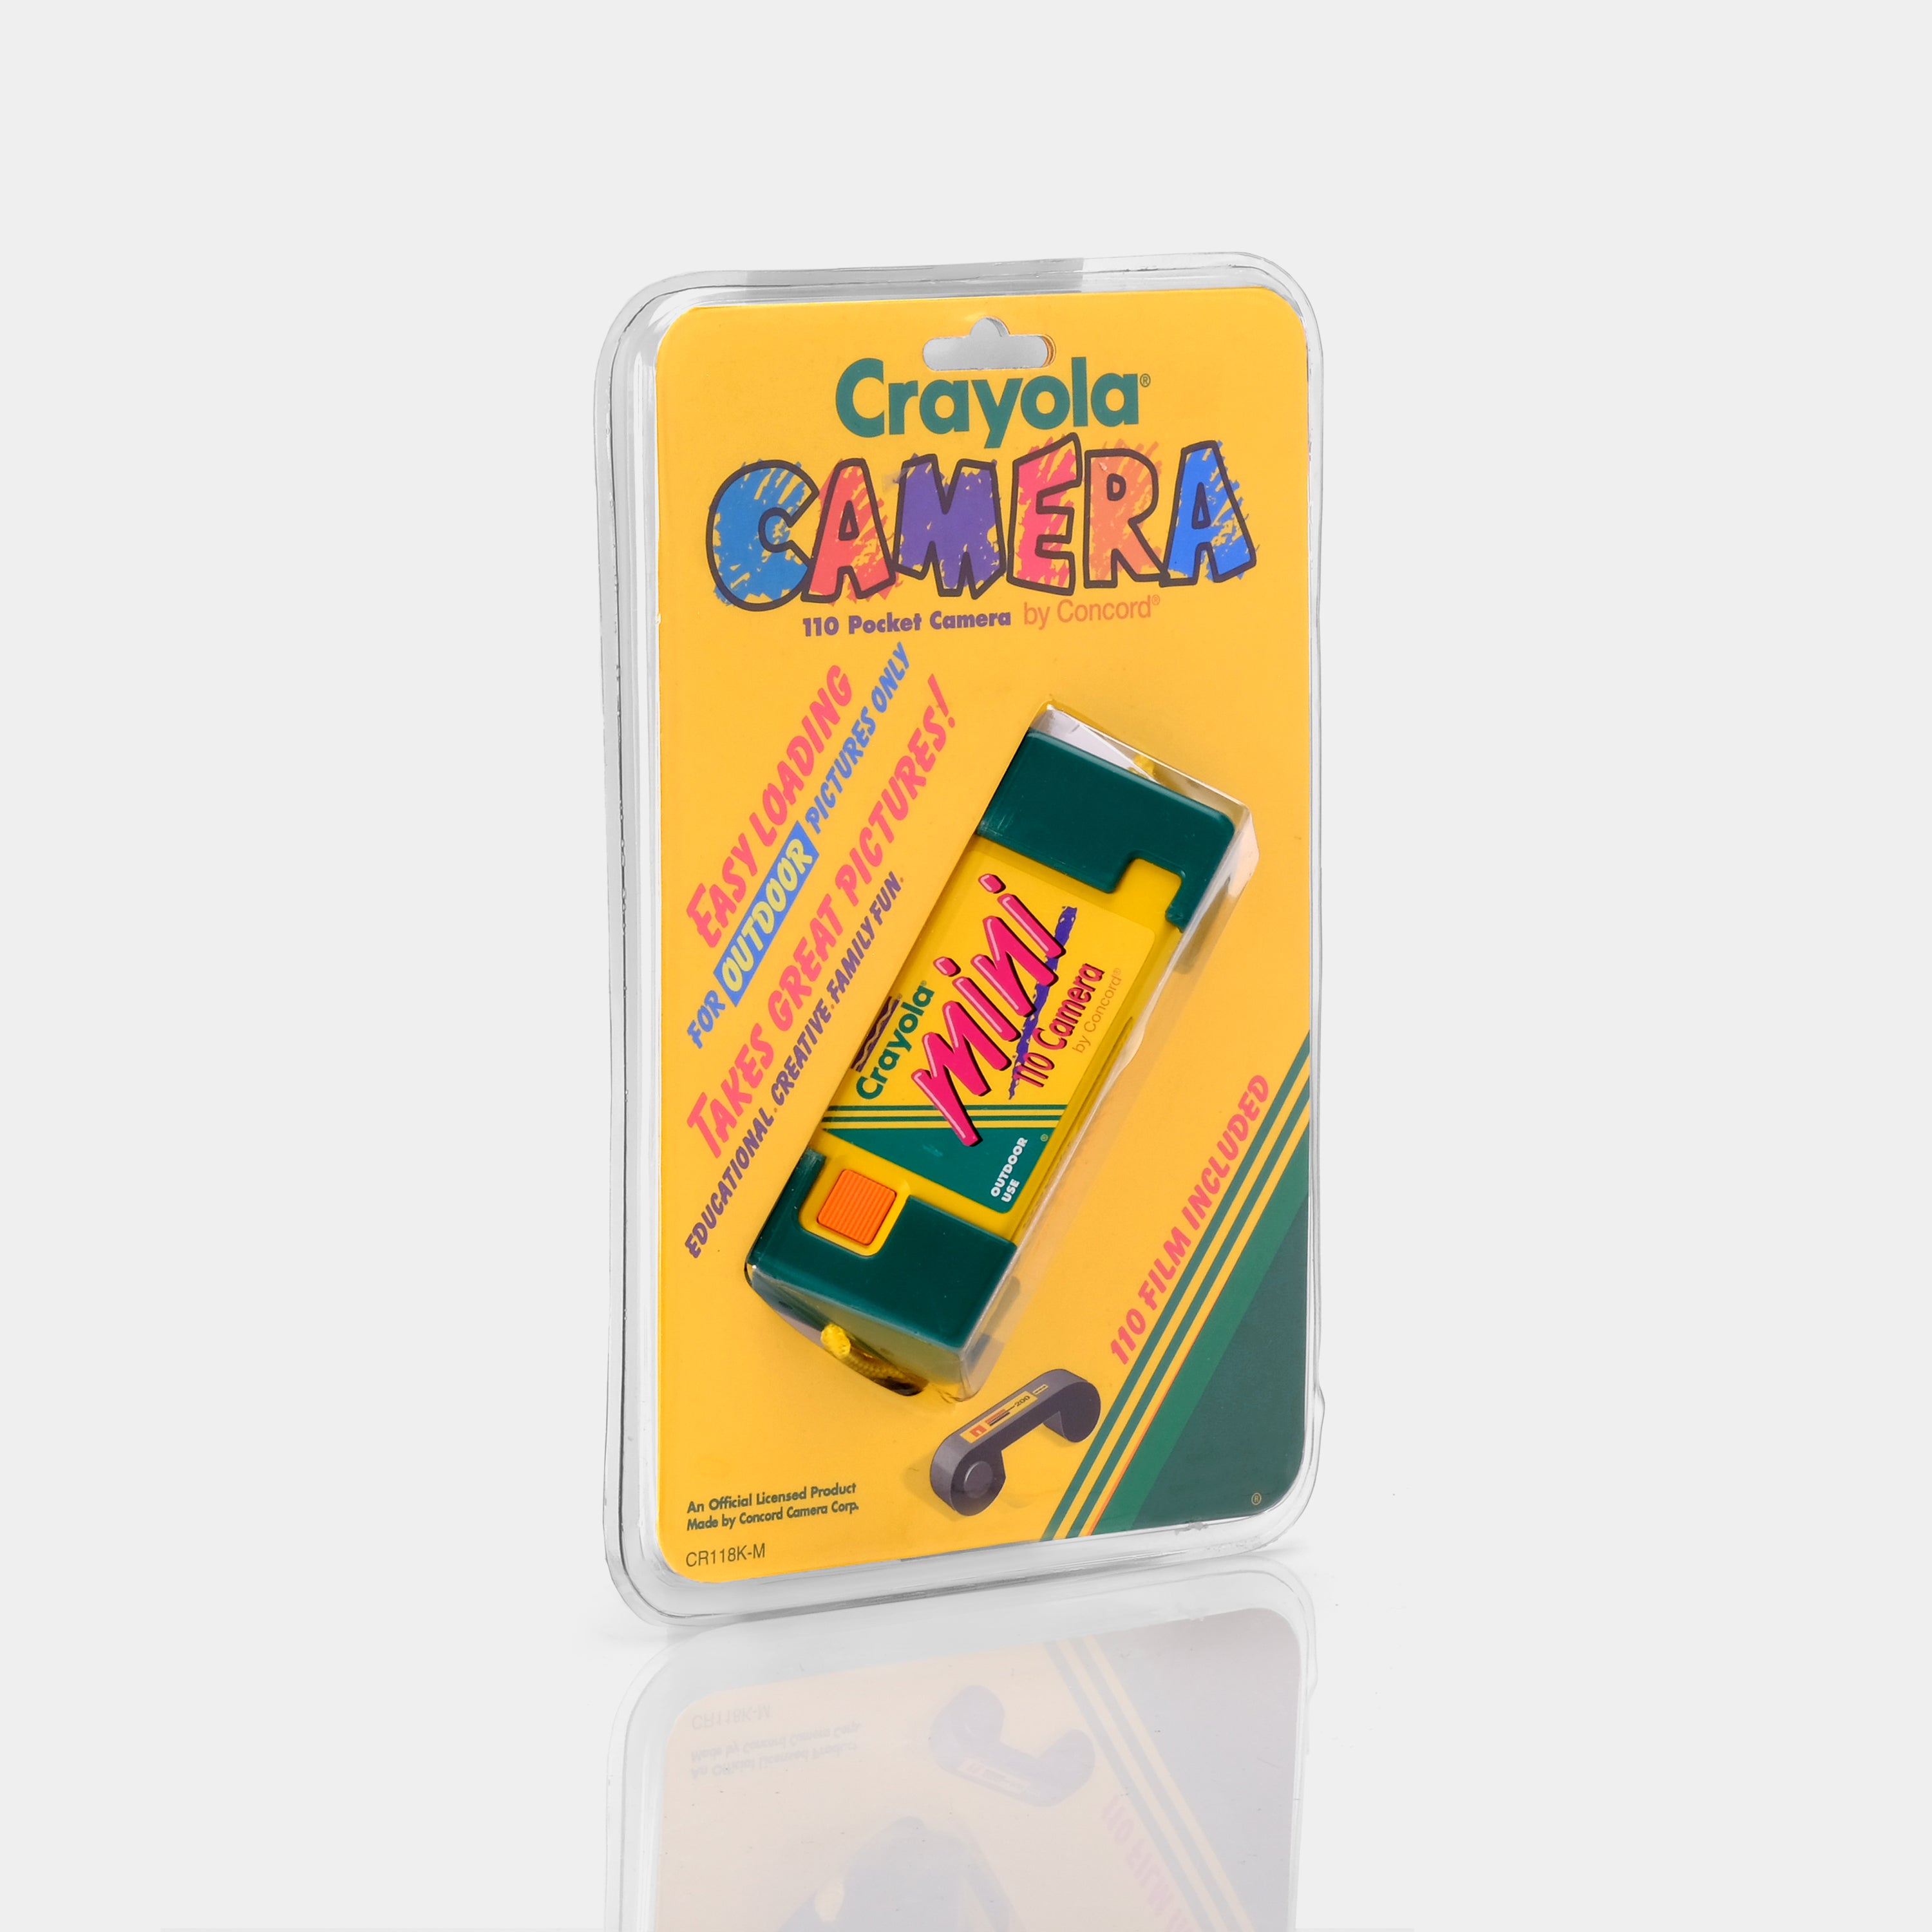 Crayola 110 Mini Pocket Film Camera (New Old Stock)